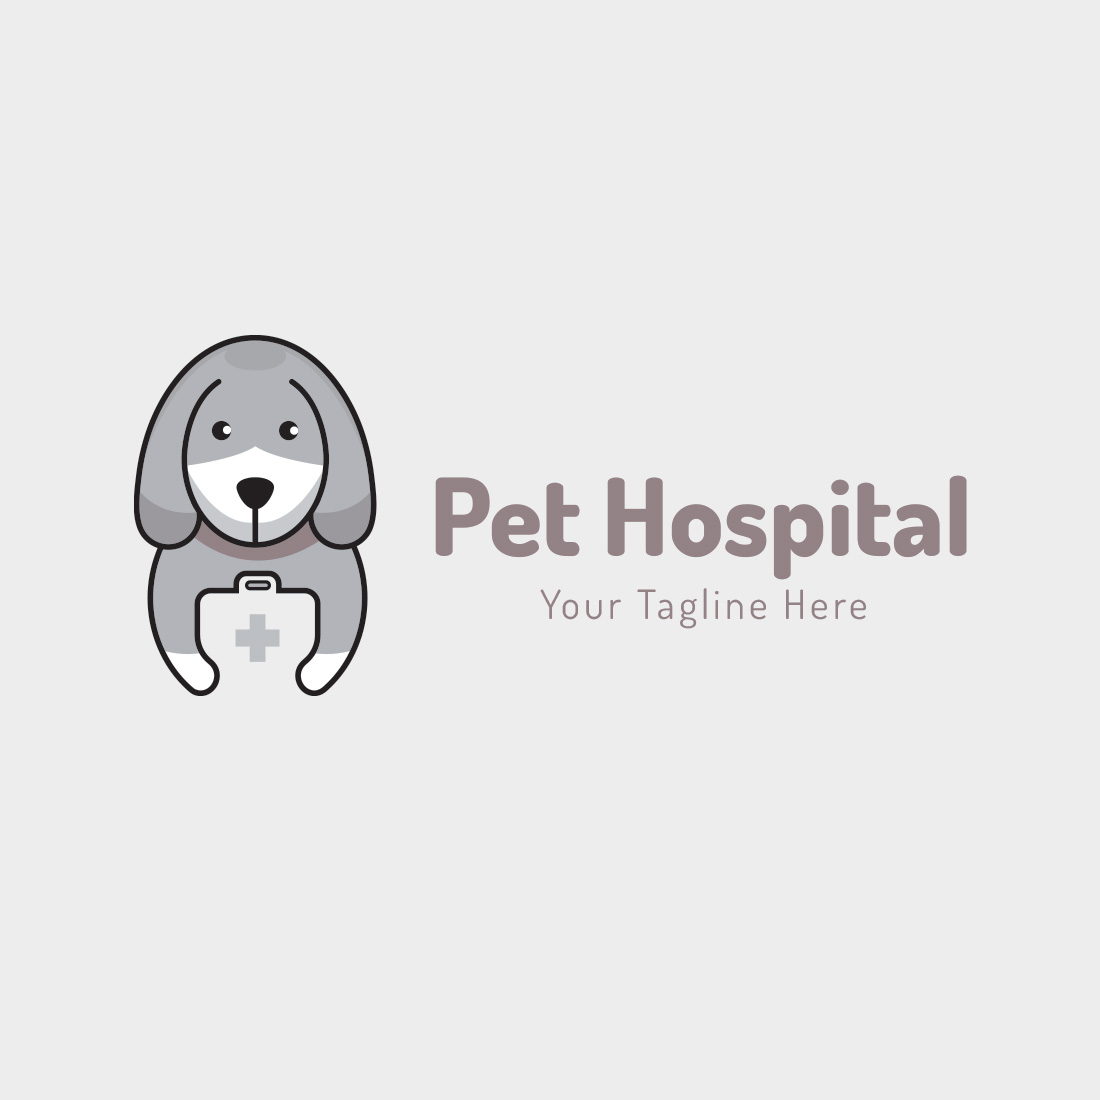 Pet Hospital Logo Design Template preview image.